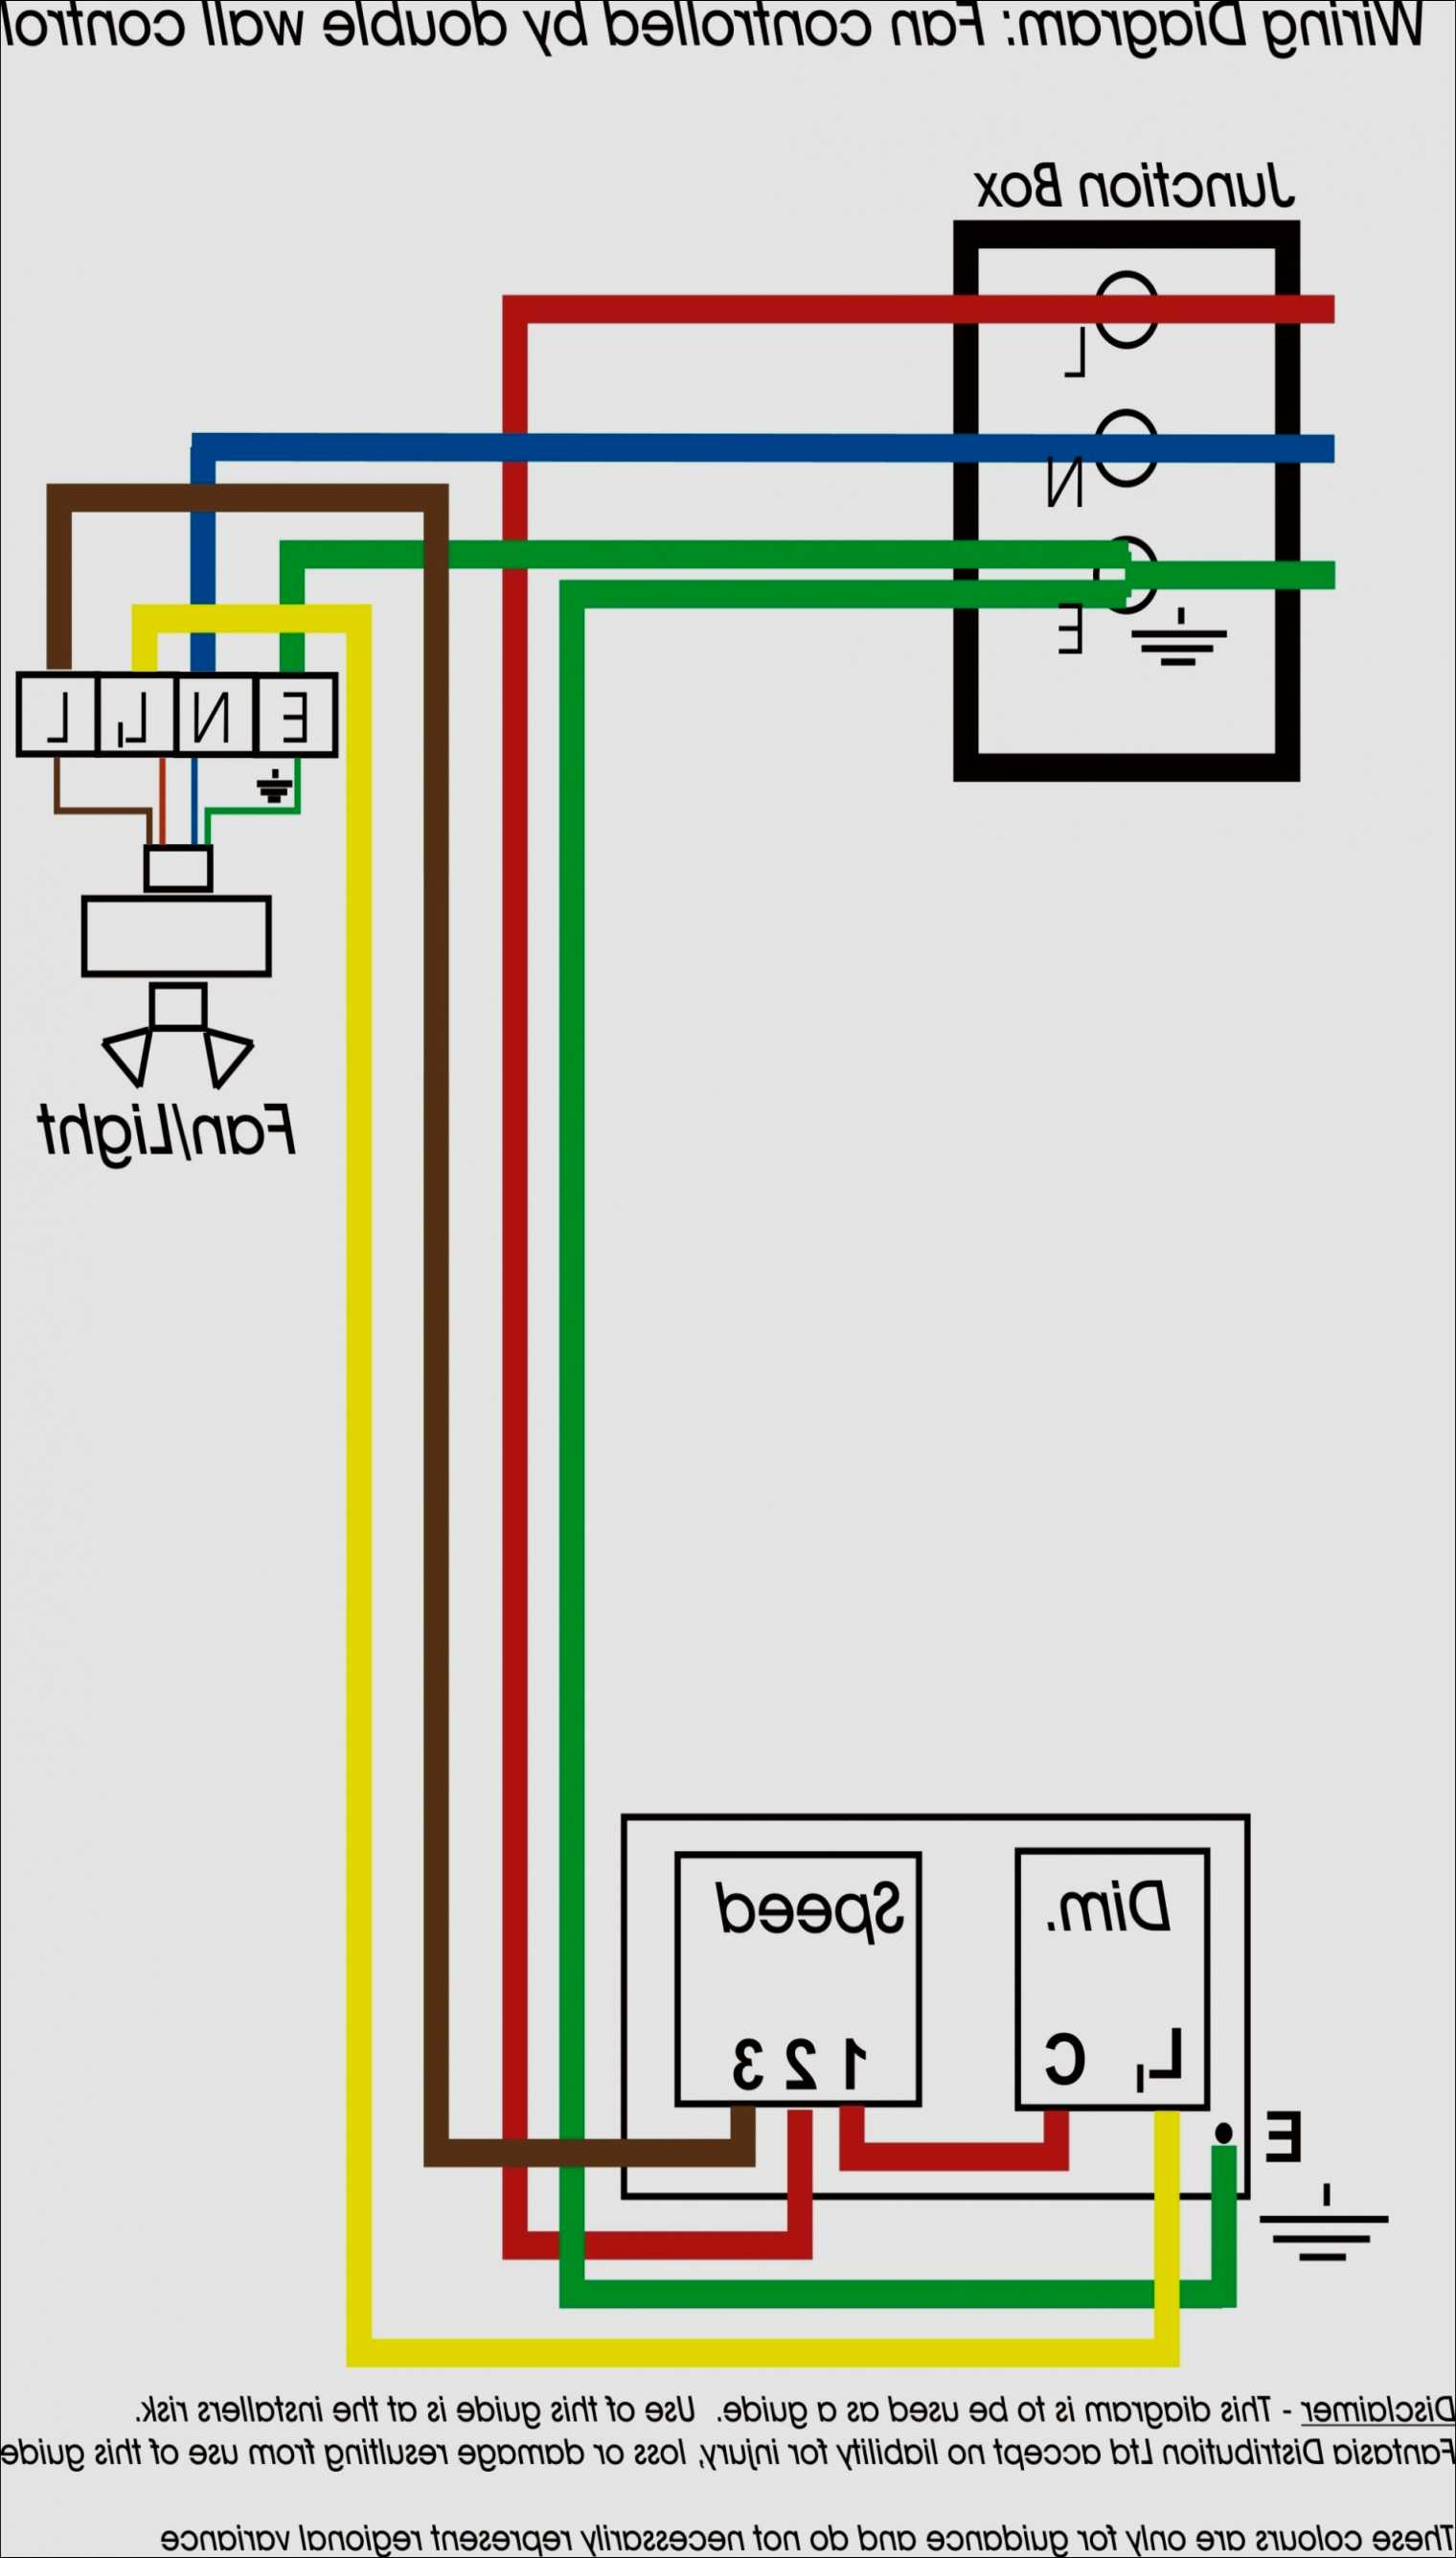 hampton bay fan wiring diagram